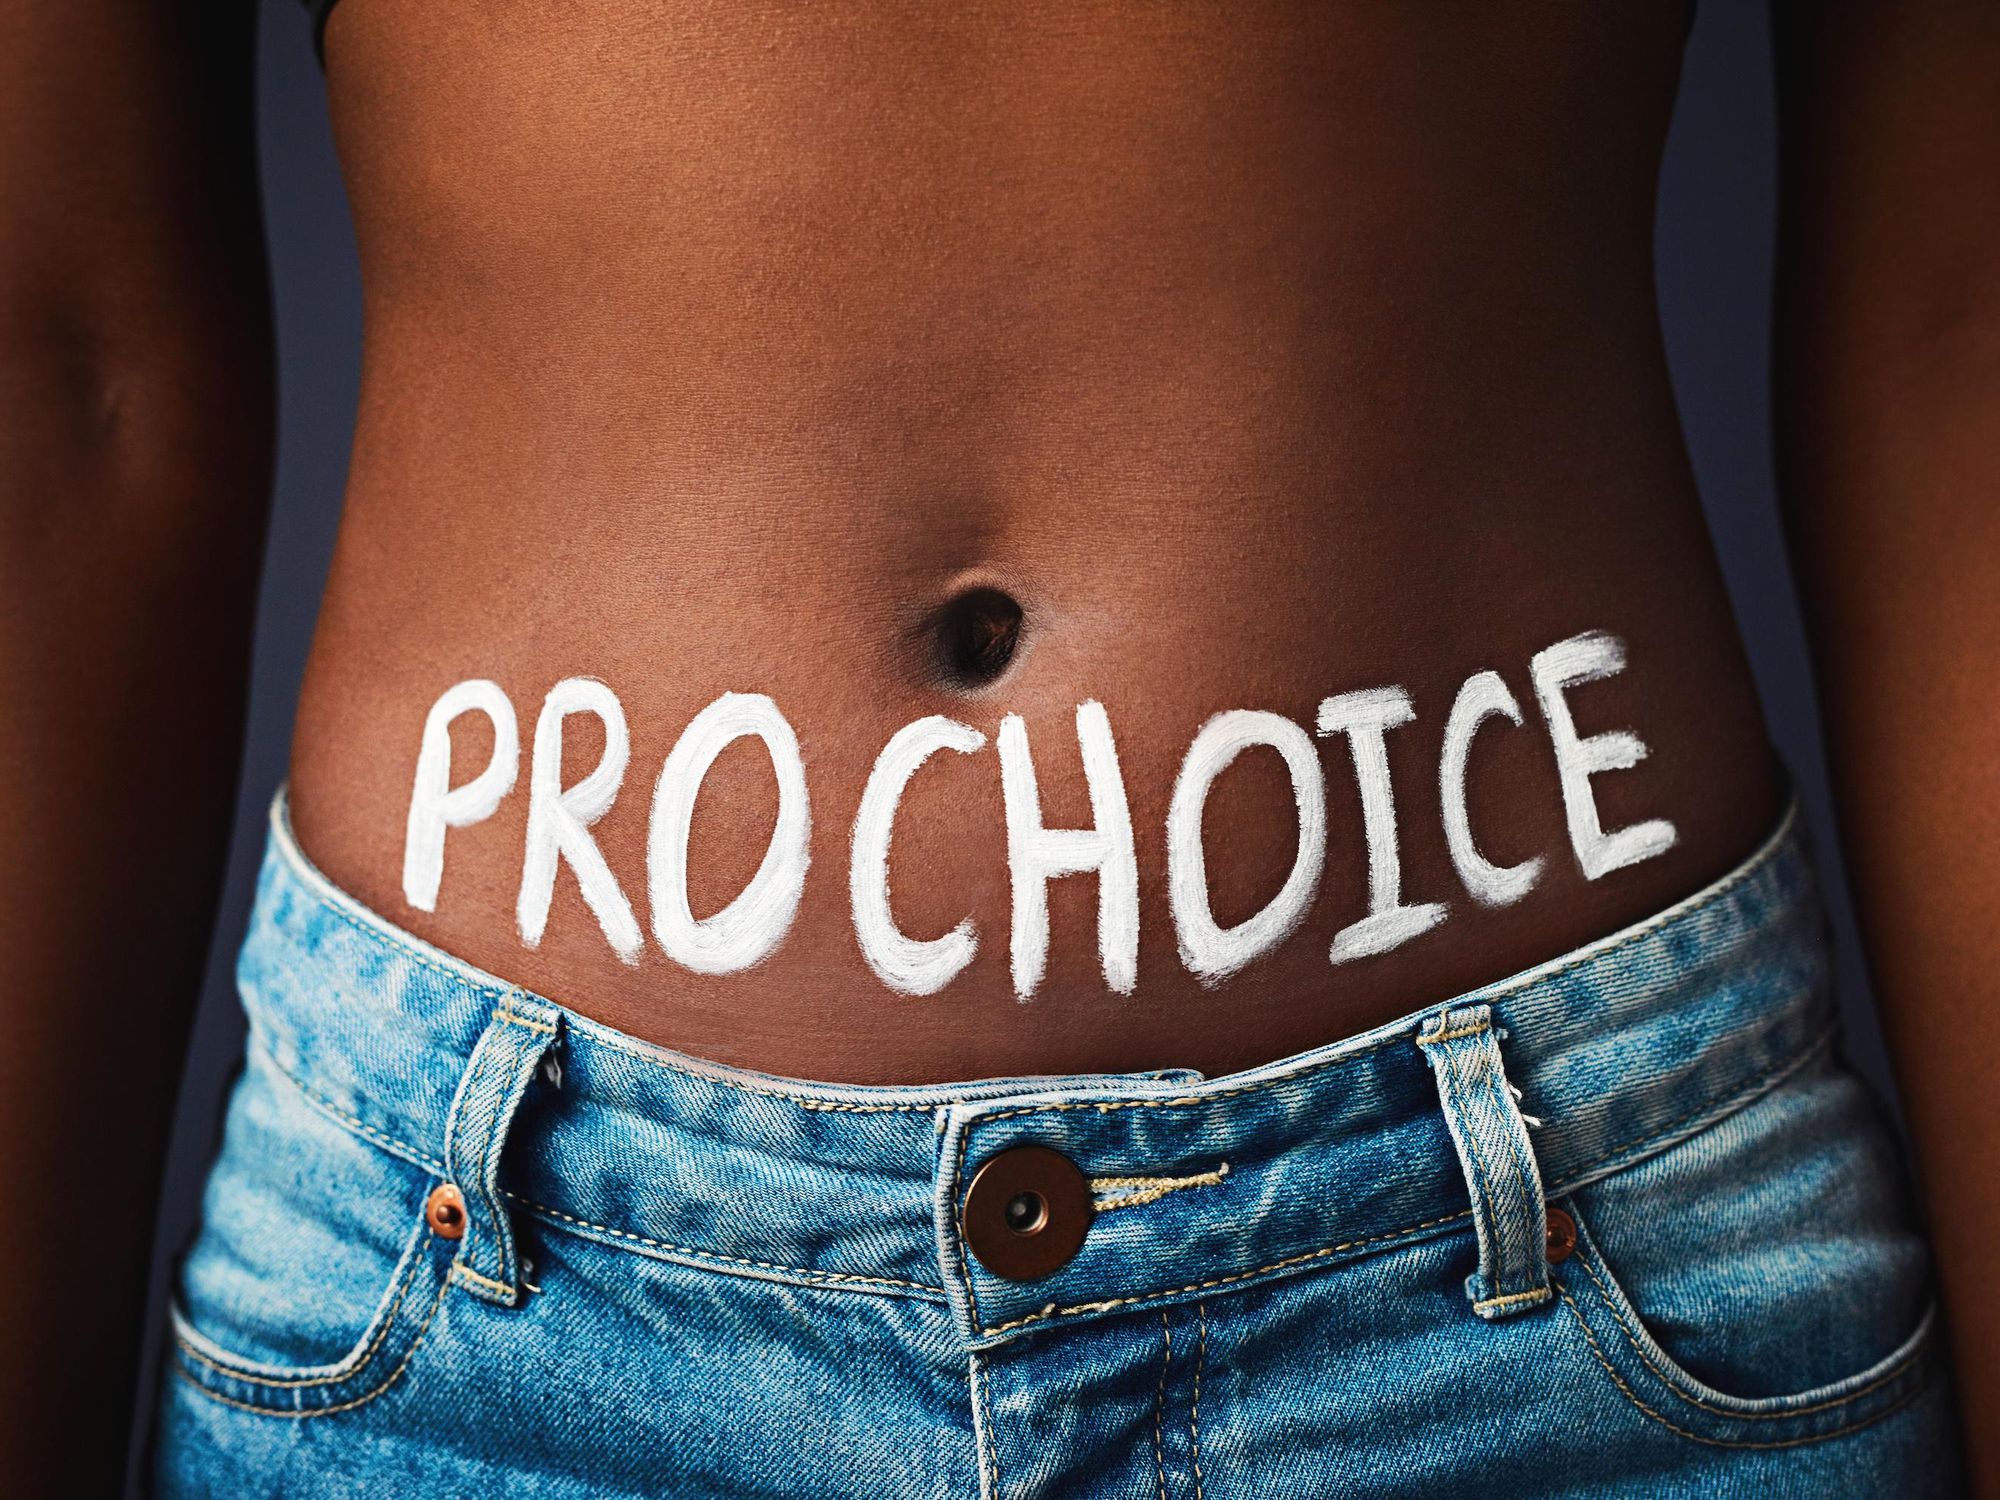 pro choice on stomach